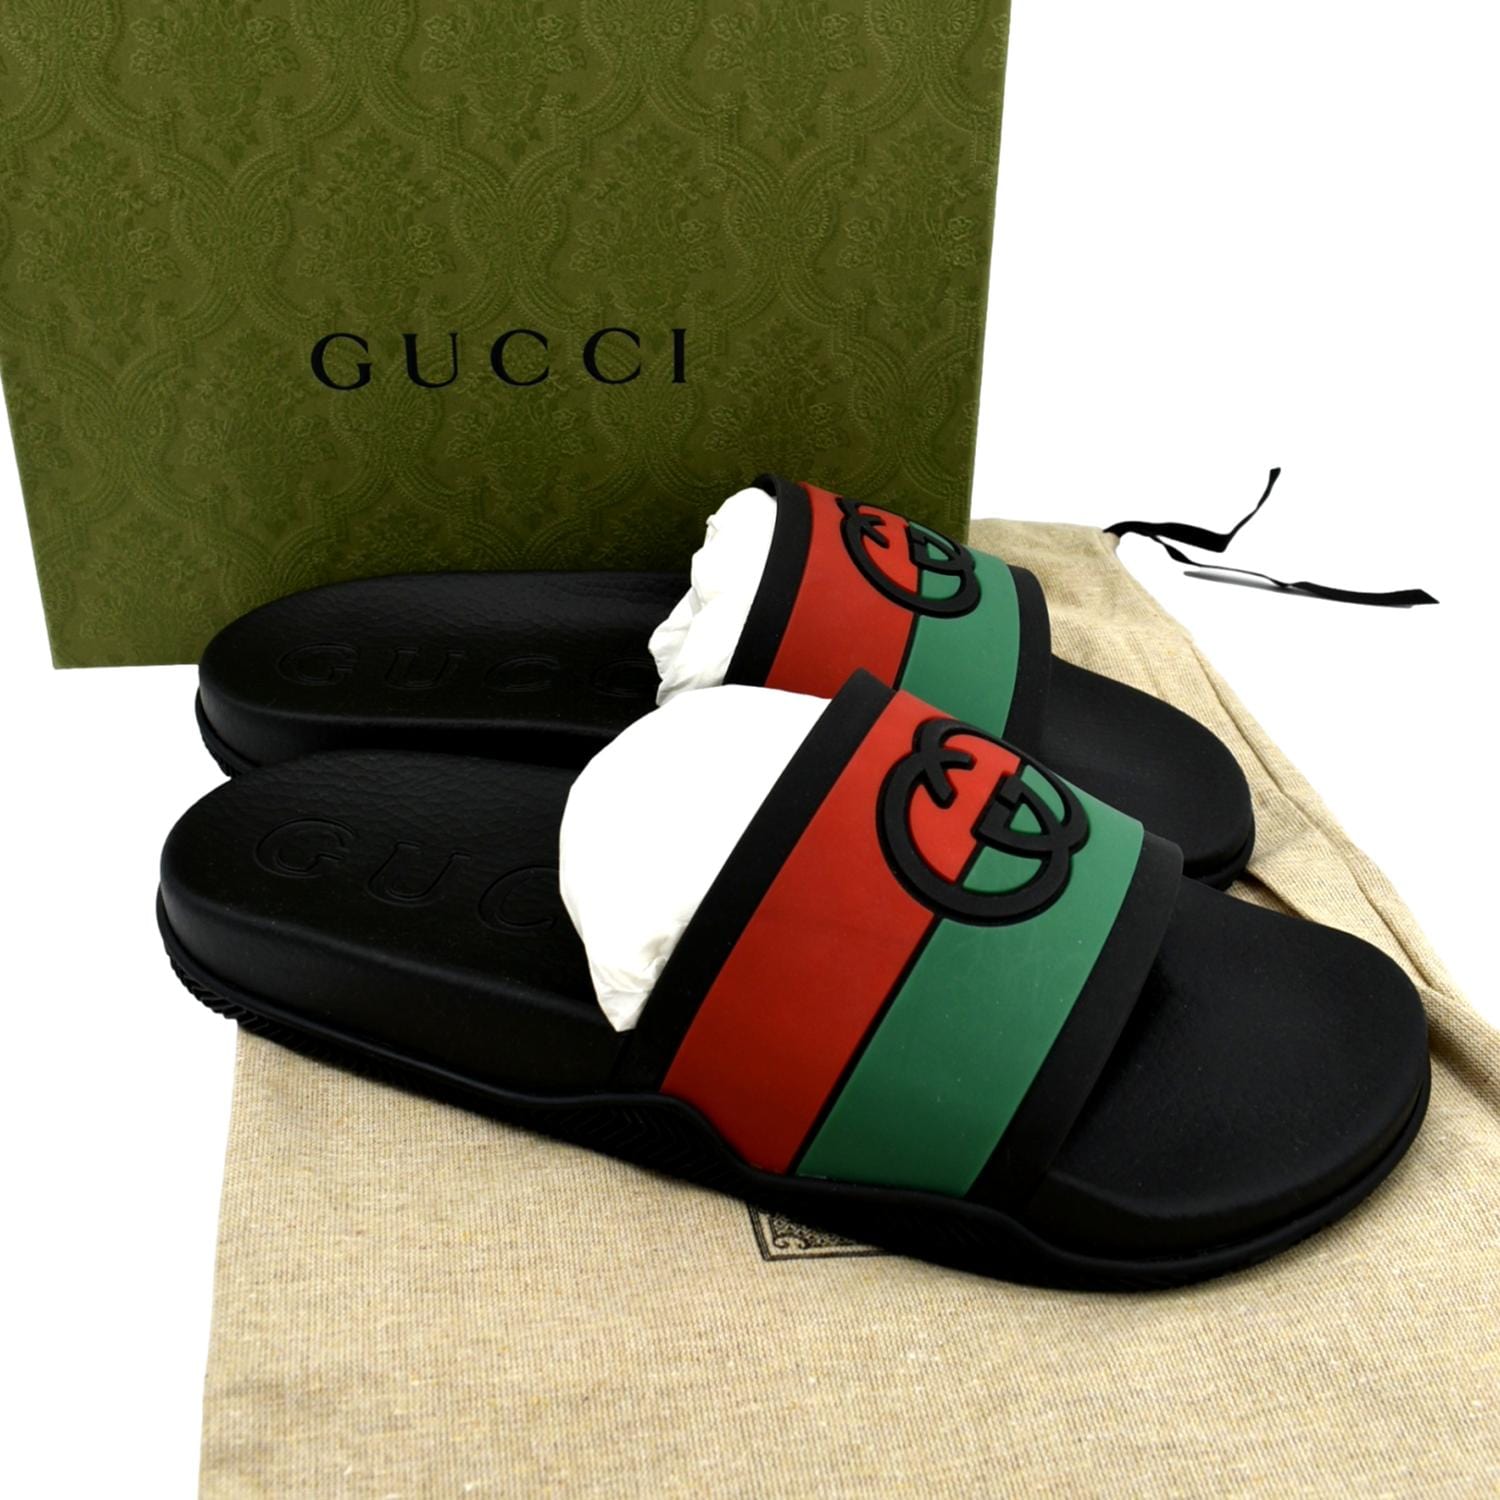 Gucci slides  Gucci slides, Gucci, Clothes design